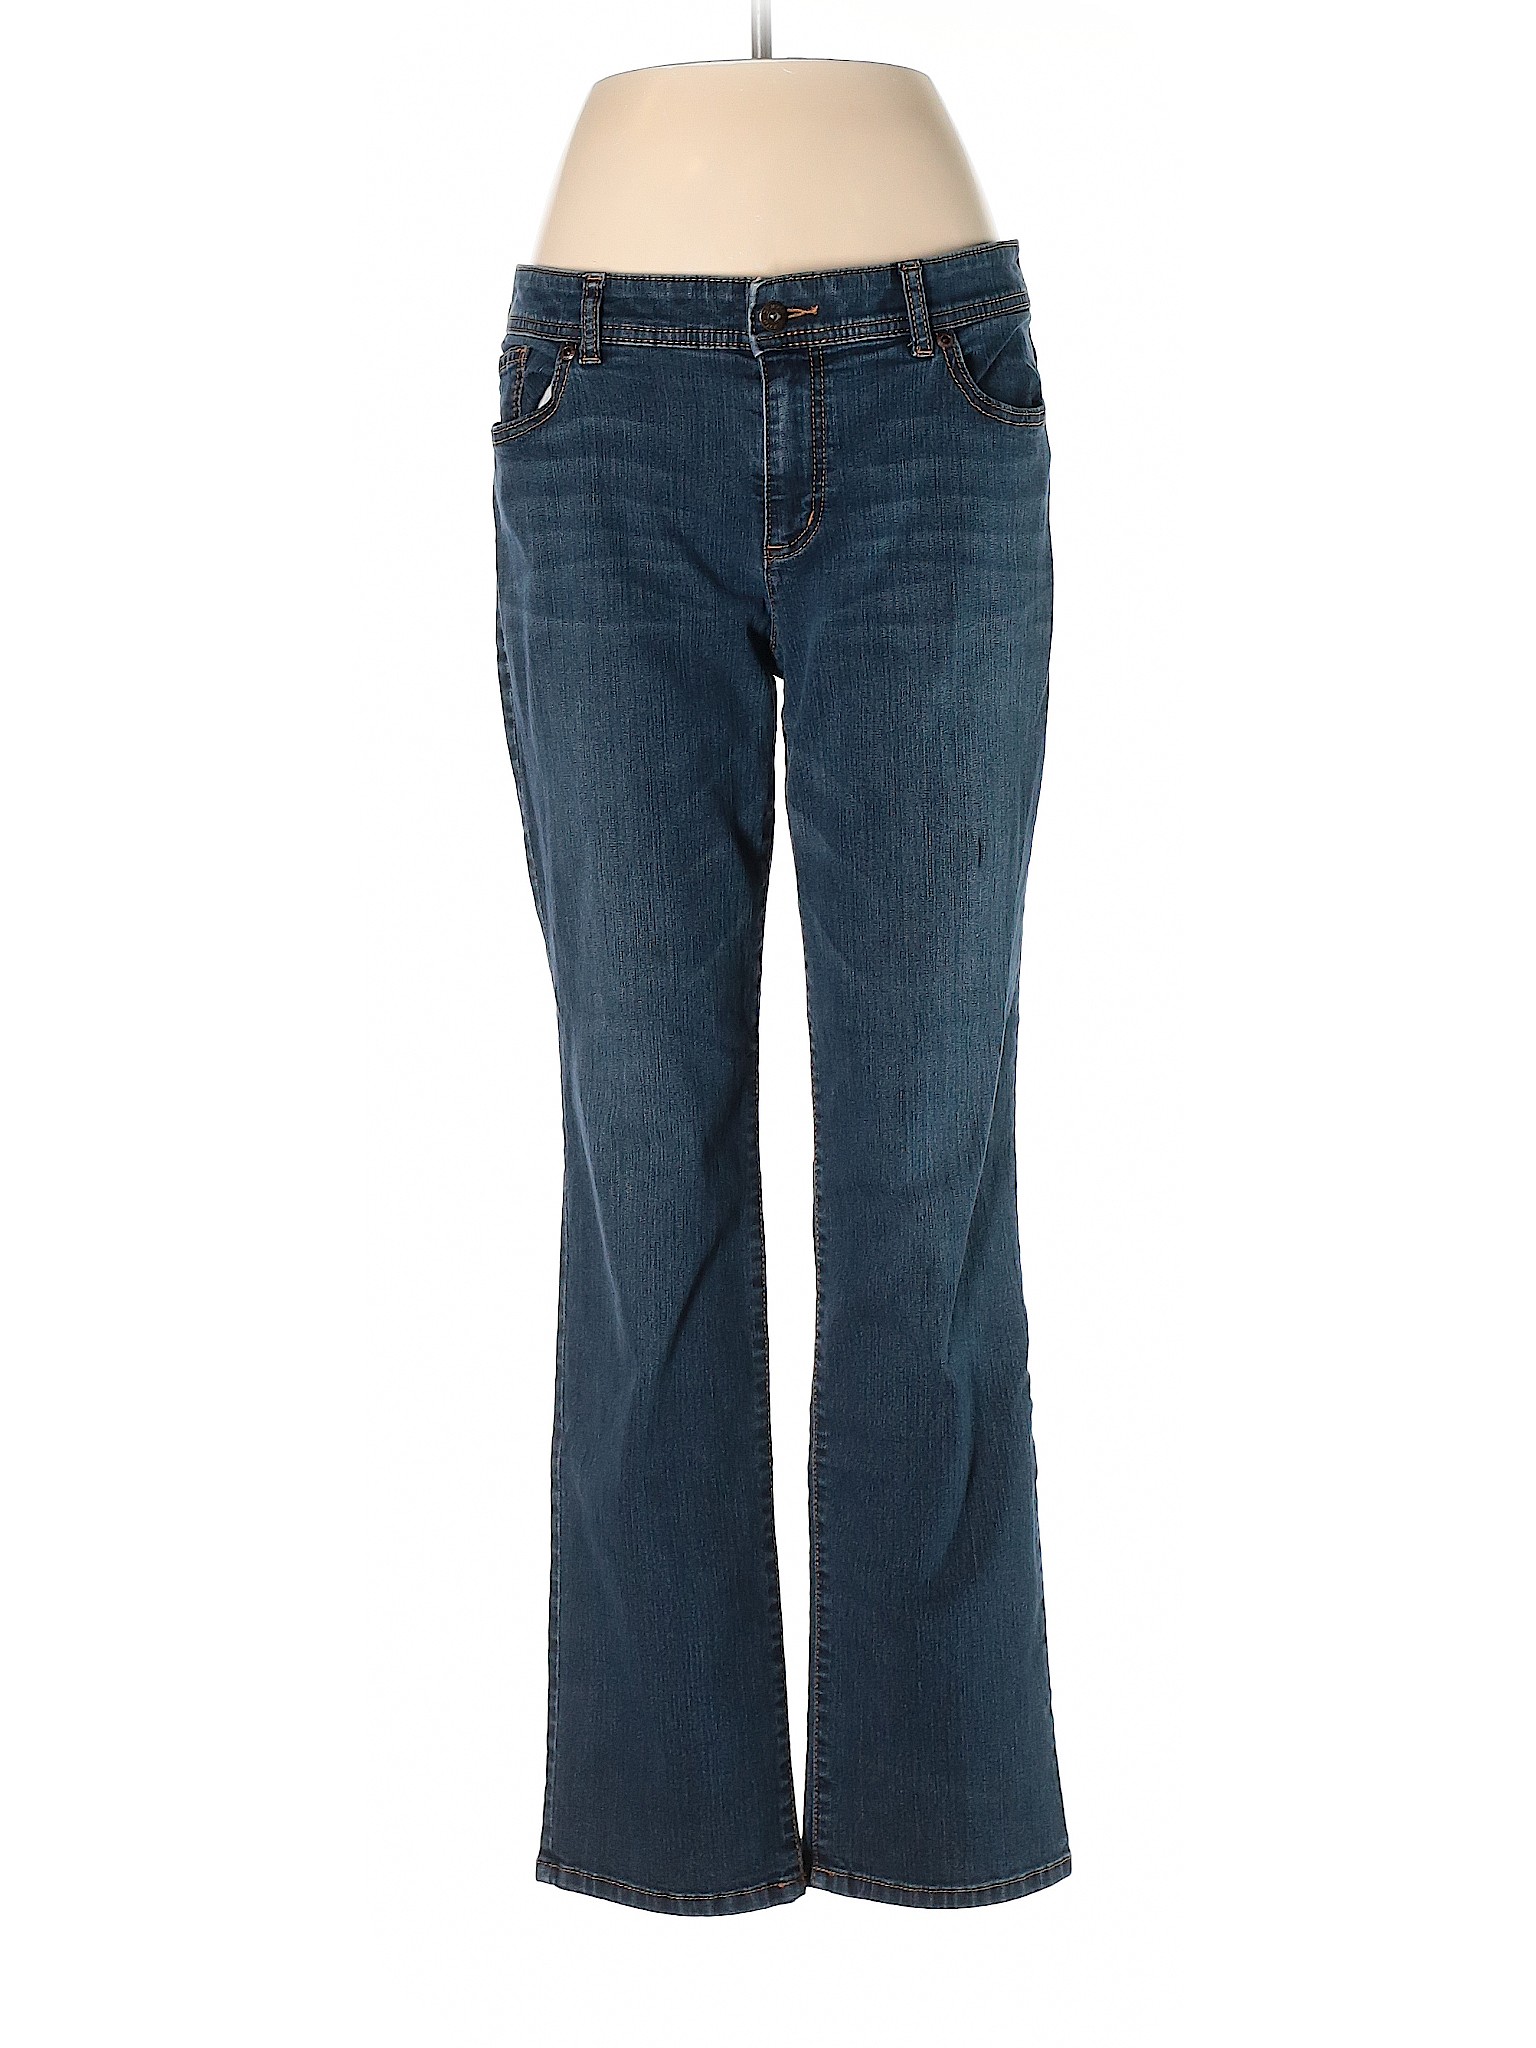 Chico's Women Blue Jeans M | eBay